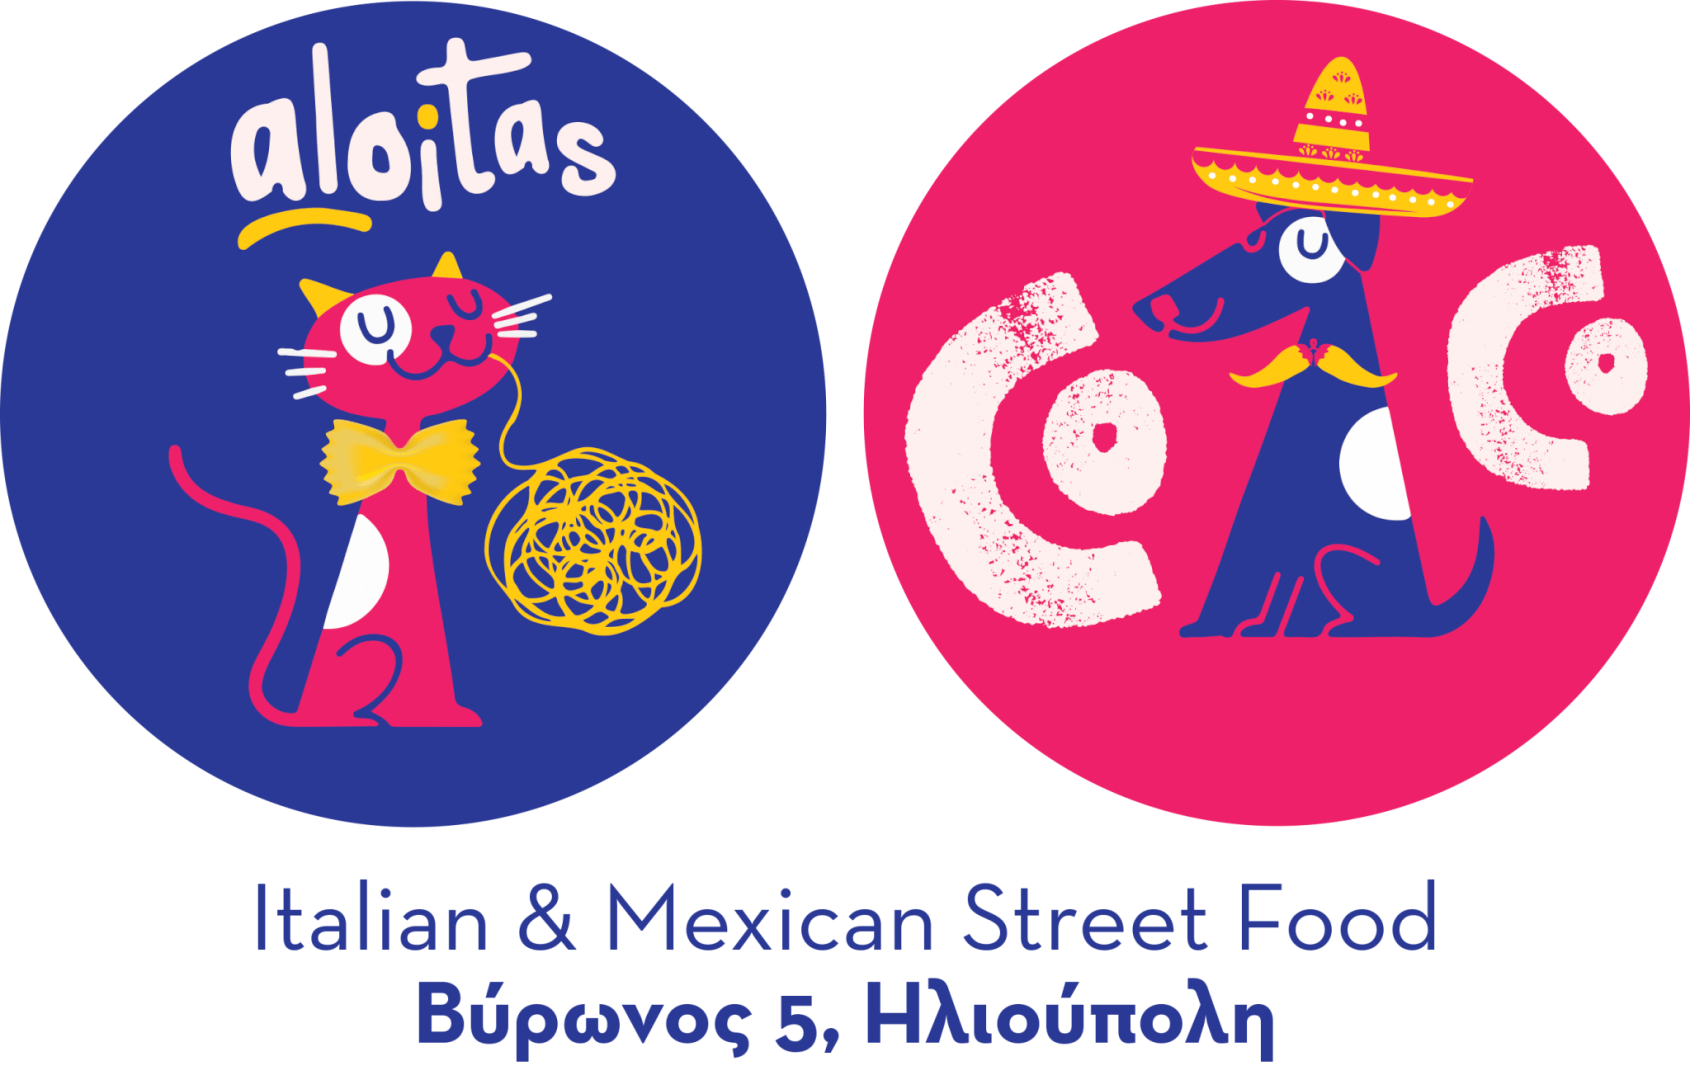 ALOITAS COCO CMYK 2 2048x1309 1 Ανοίγει Τις Πύλες Του Το Aloitas & Coco Στην Ηλιούπολη - Το Street Food Που Θα Λατρέψετε